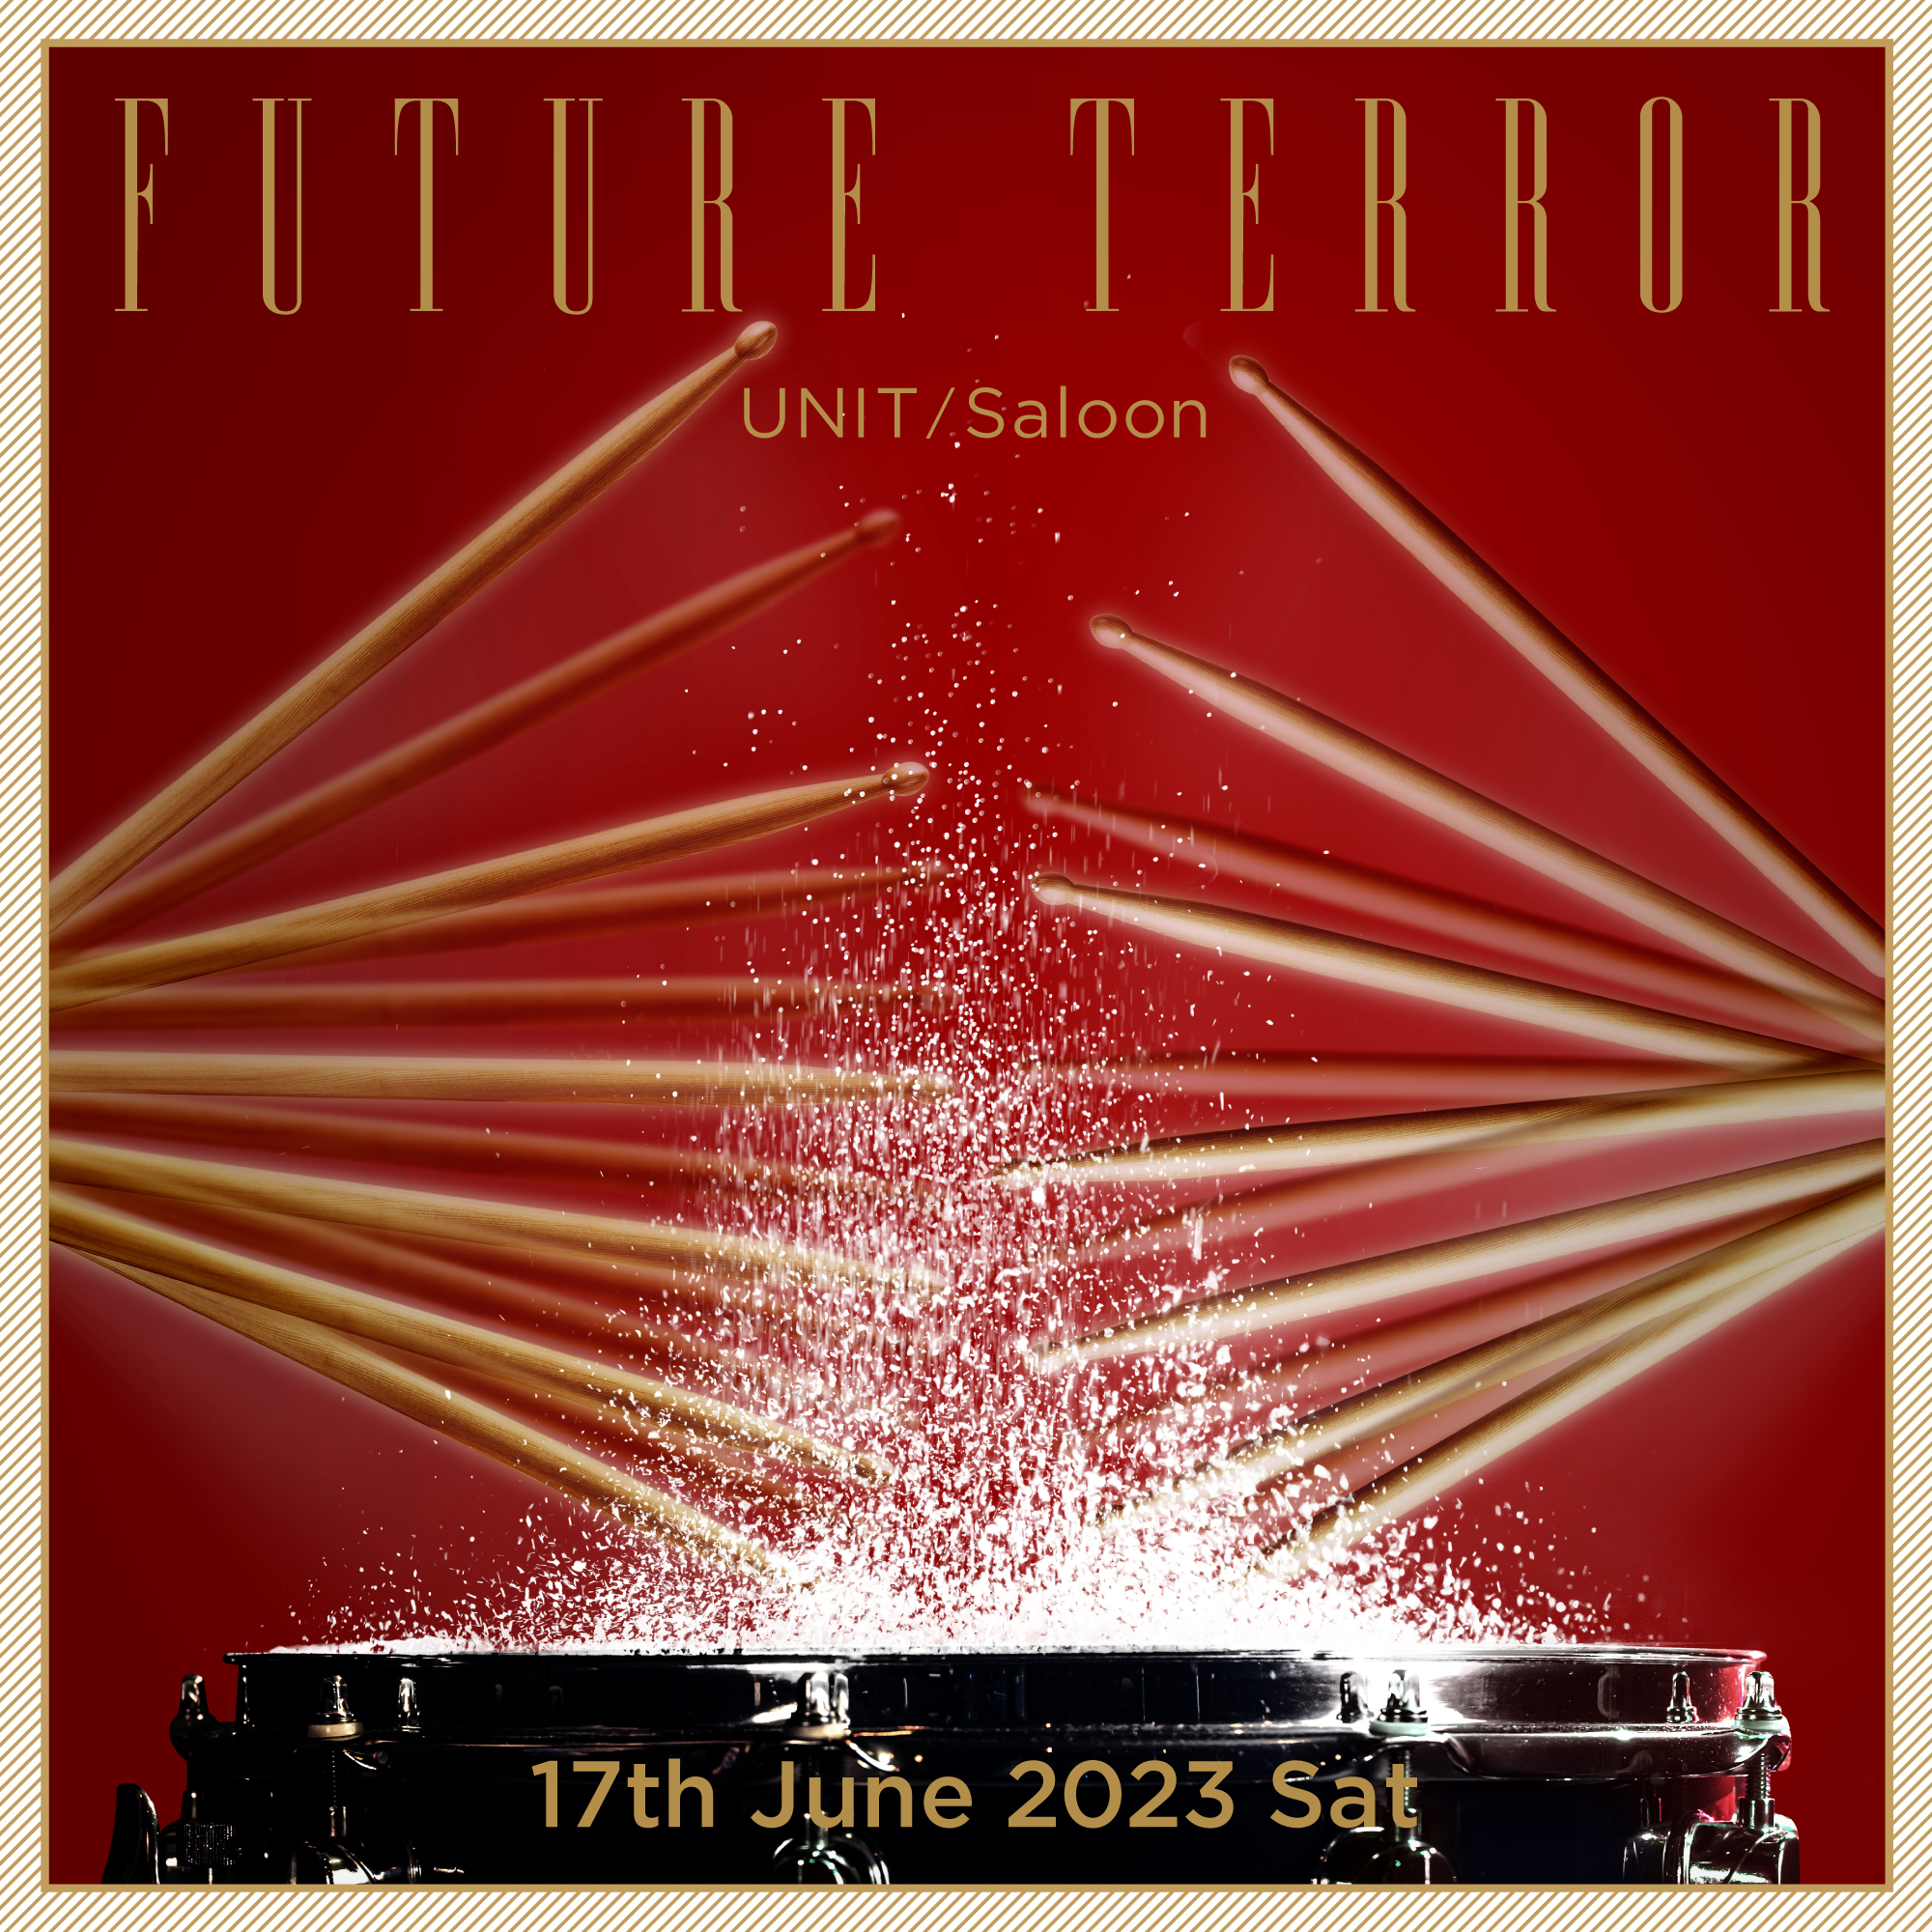 FUTURE TERROR at UNIT / Saloon